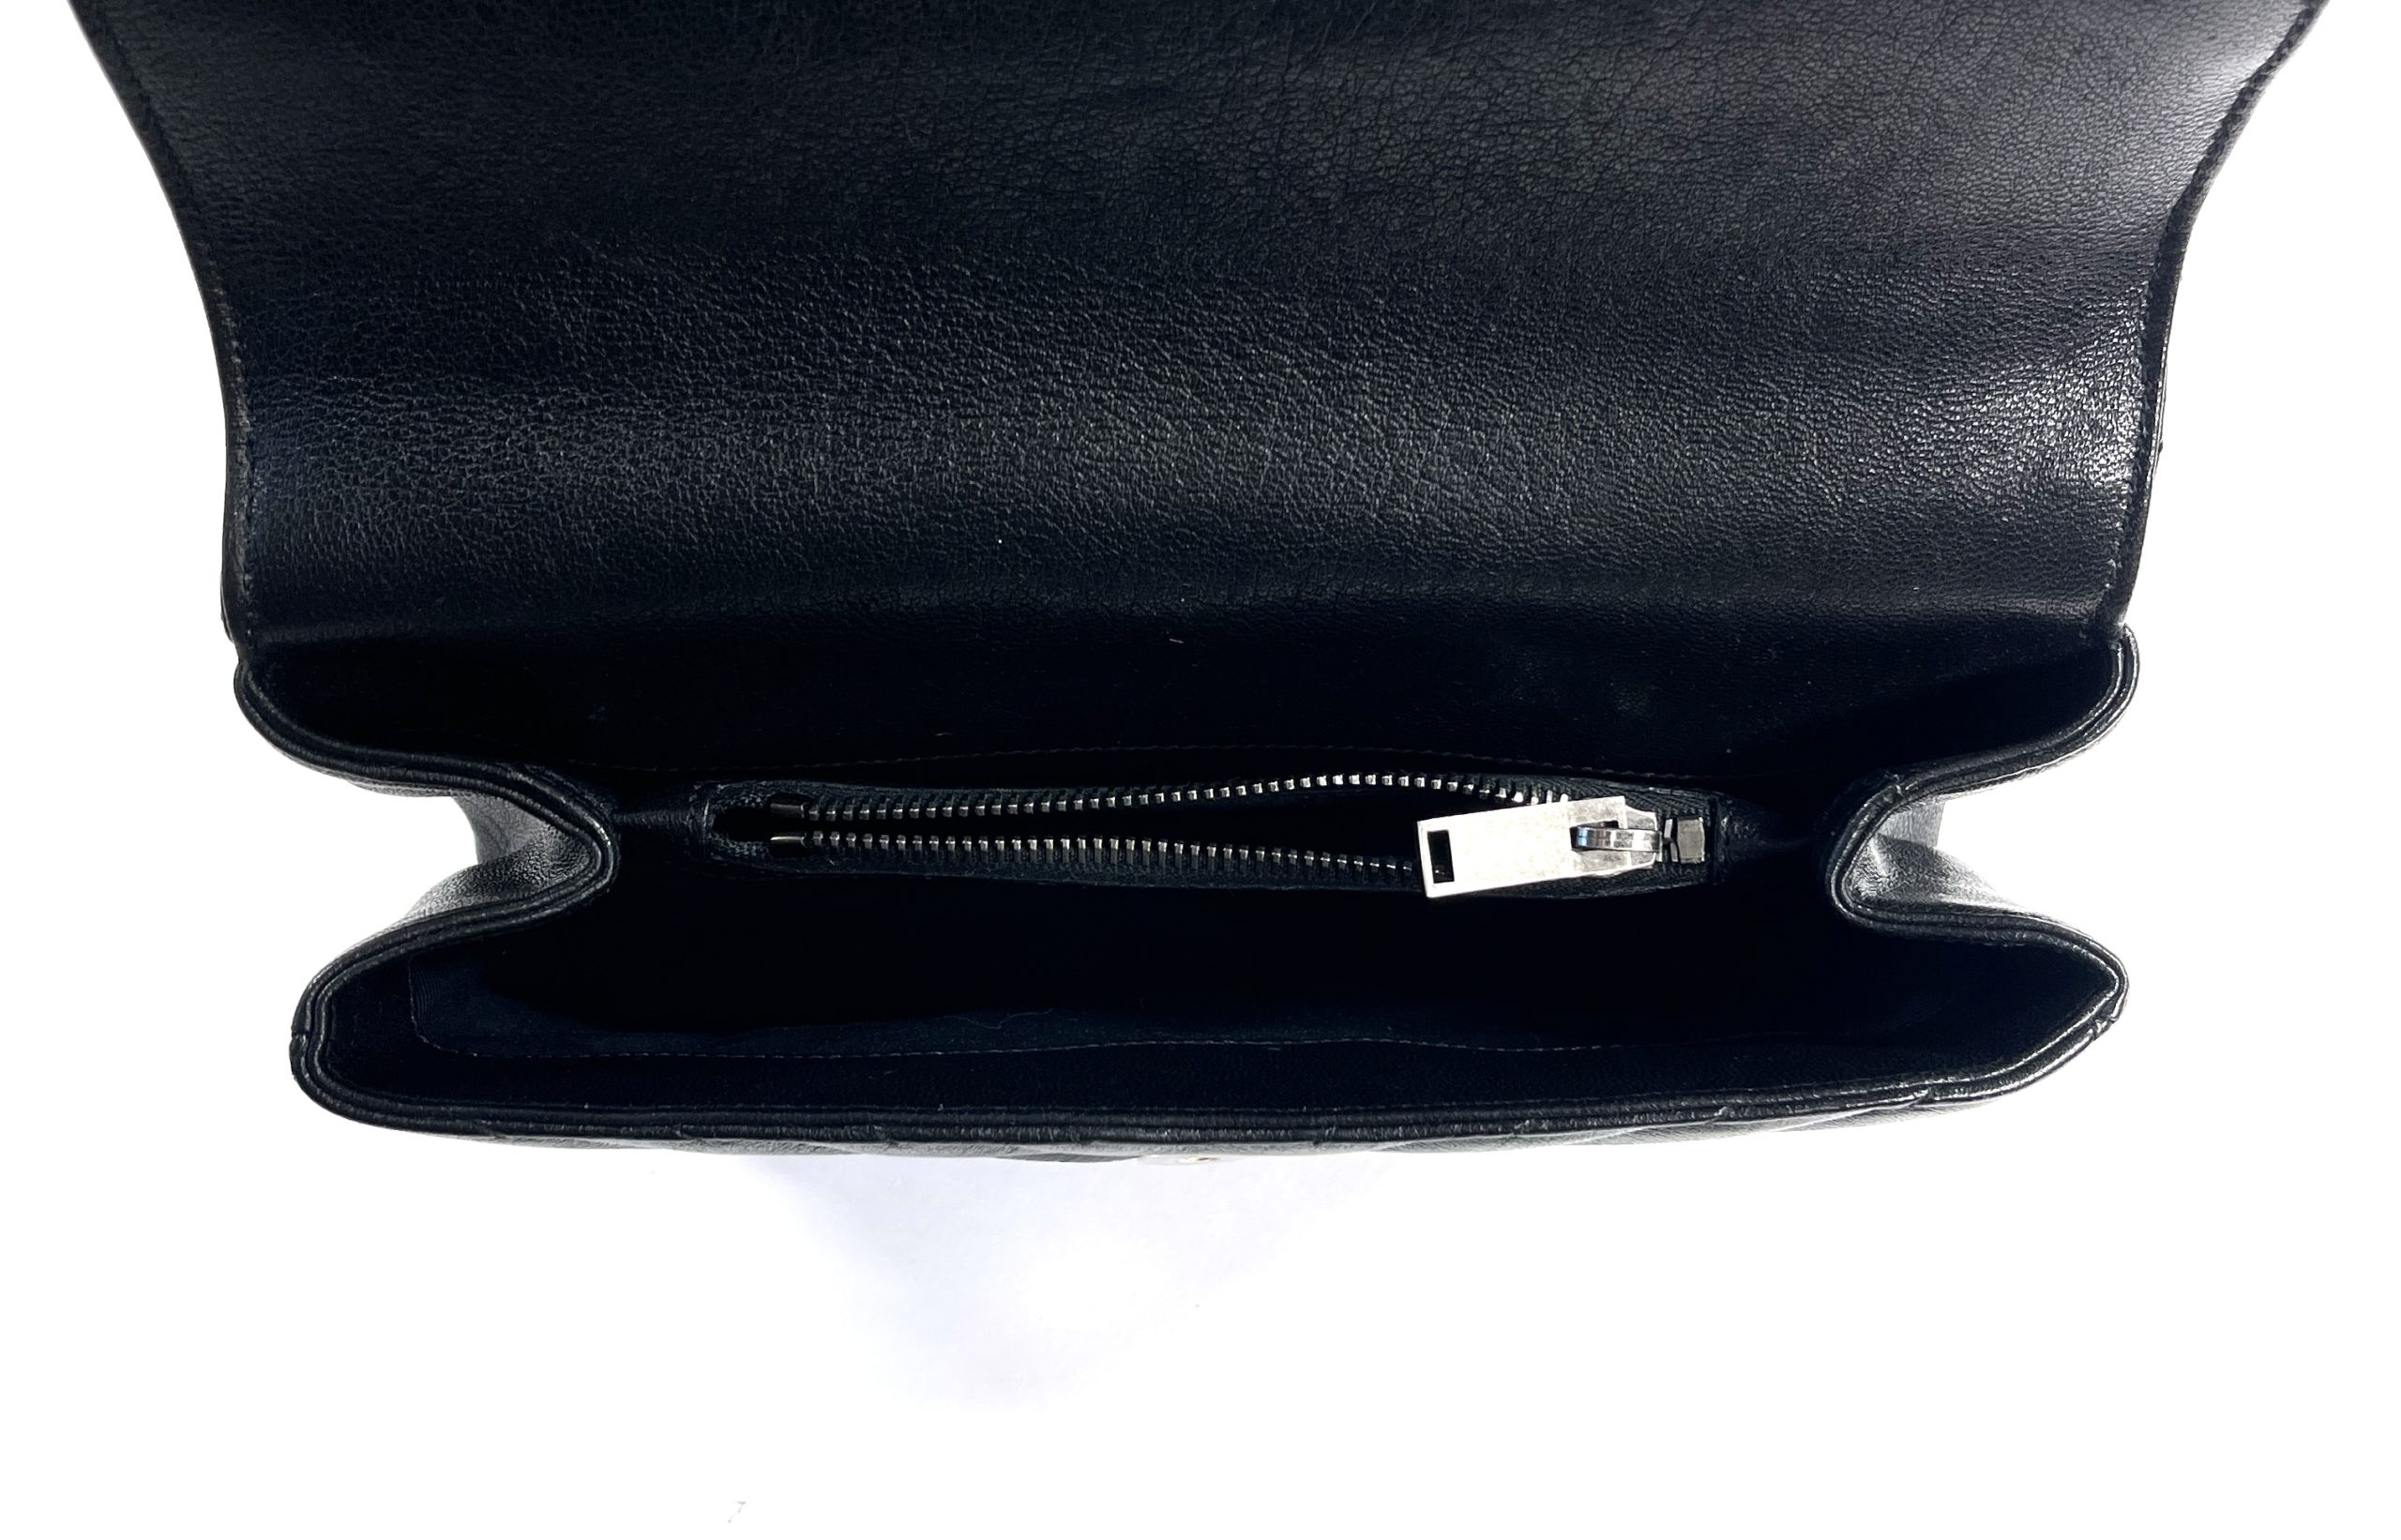 Chanel Surpique Chevron Medium Lambskin Leather Flap Crossbody Bag Black